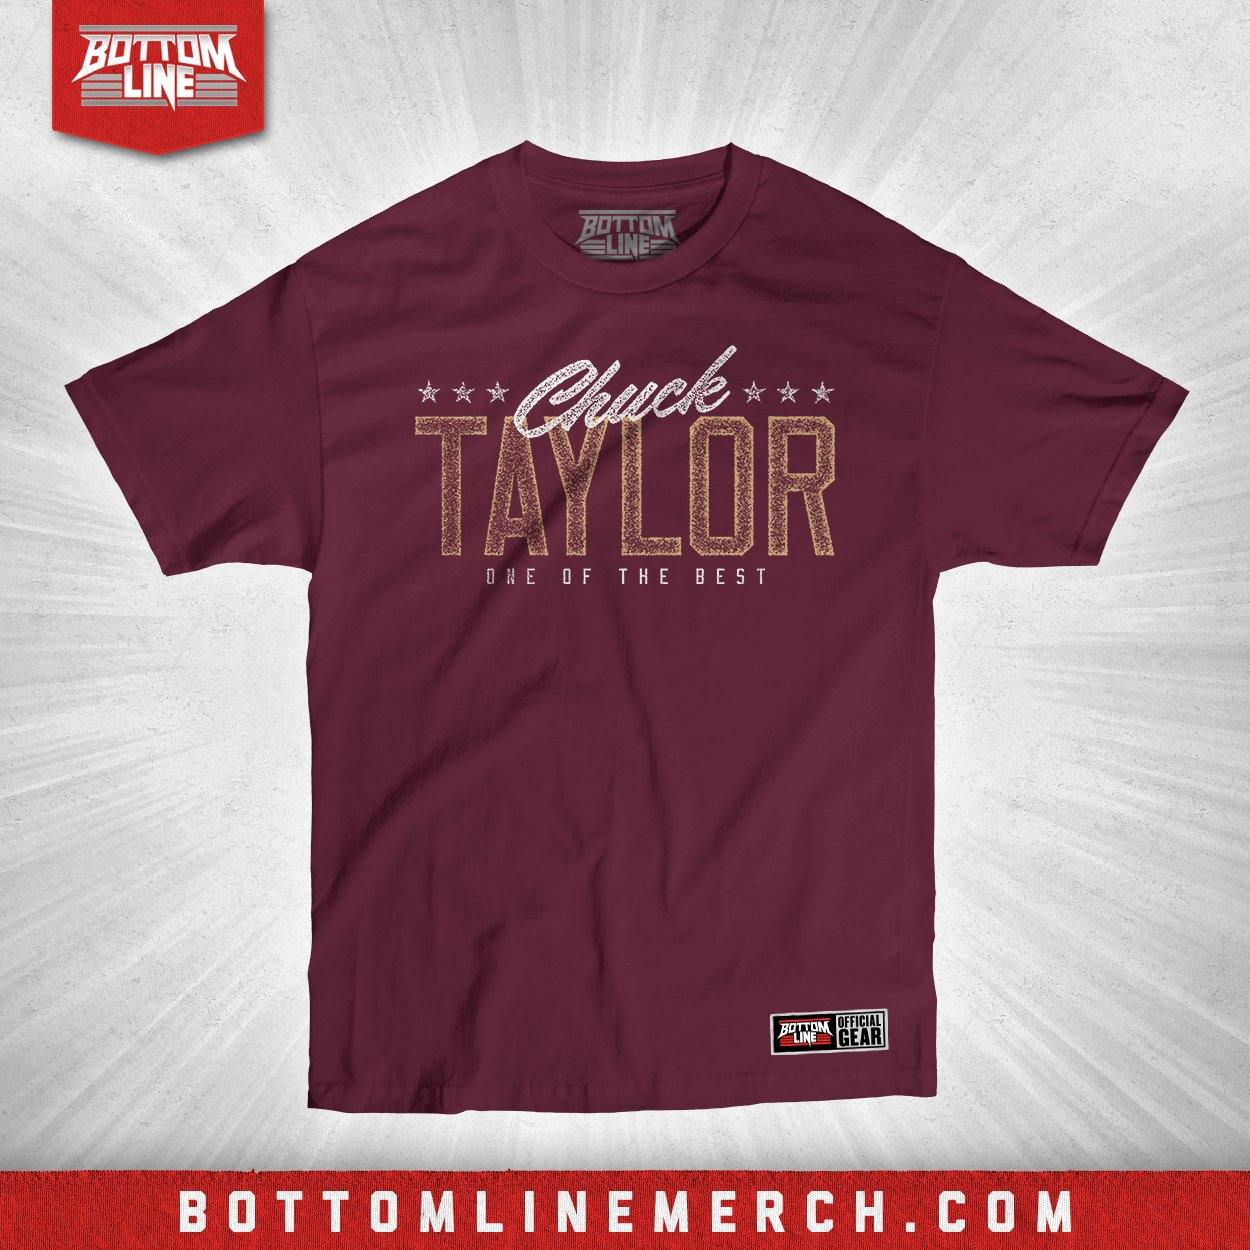 Buy Now – Chuck Taylor "One of the Best" Shirt – Wrestler & Wrestling Merch – Bottom Line